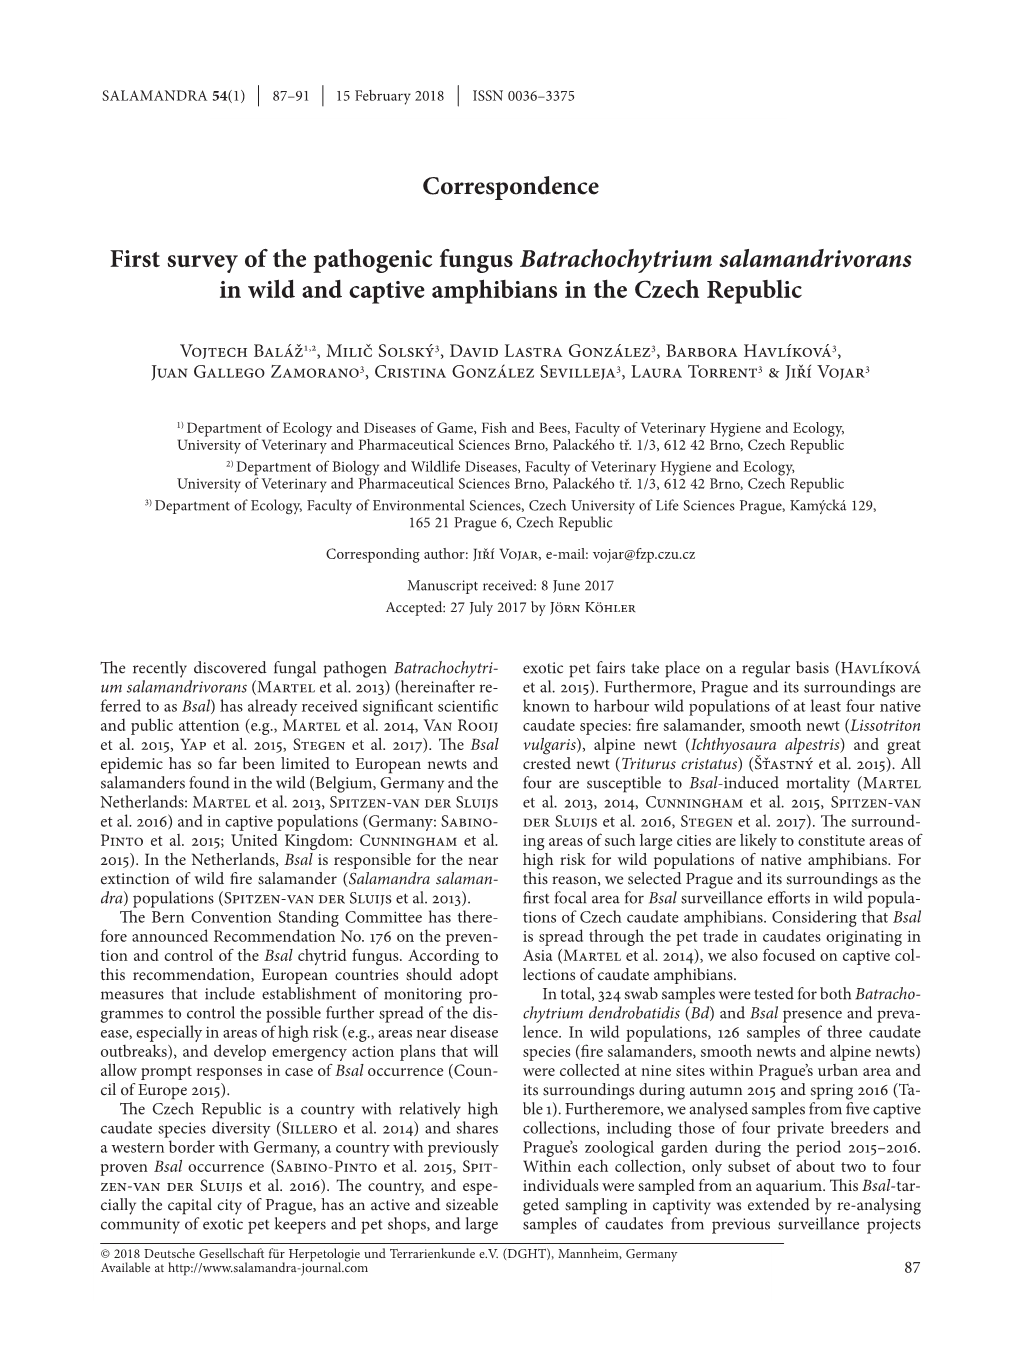 First Survey of the Pathogenic Fungus Batrachochytrium Salamandrivorans in Wild and Captive Amphibians in the Czech Republic